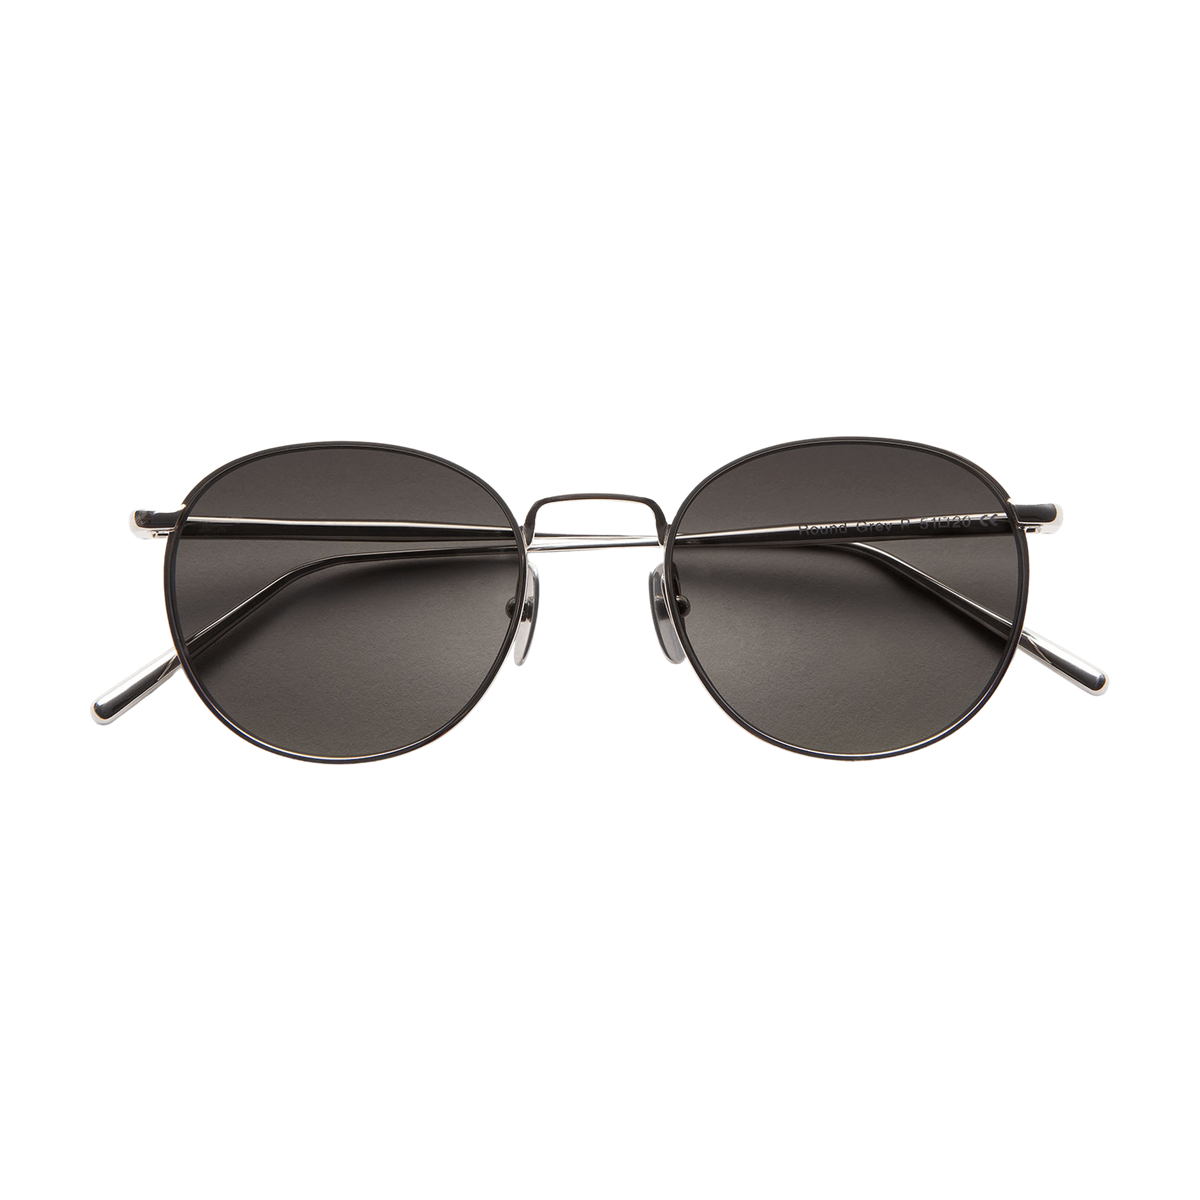 Chimi Eyewear Steel Round Grey Lenses Sunglasses 50mm Feature